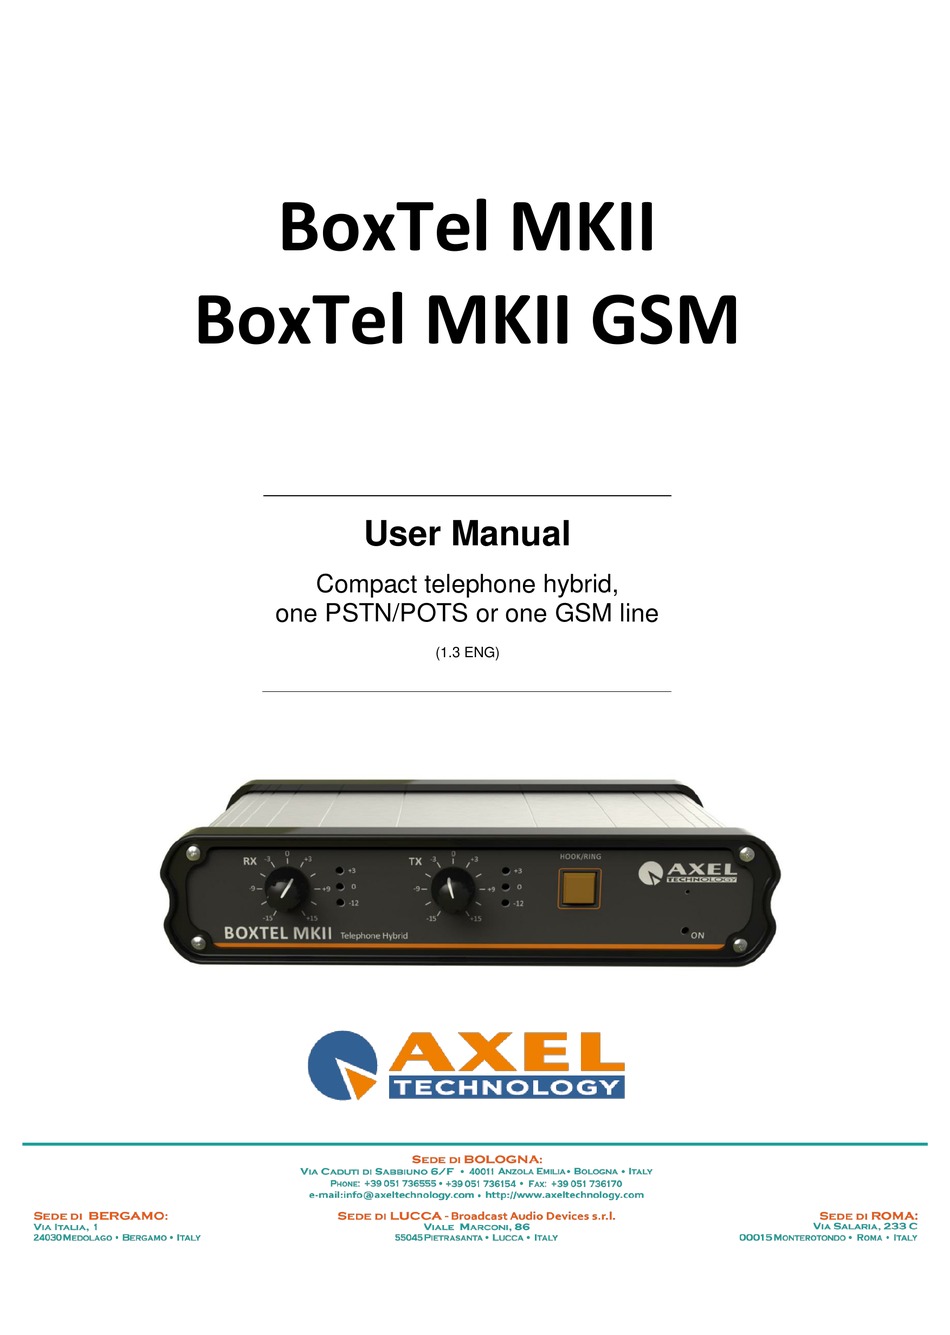 Boxtel MK11 GSM compact telephone hybrid 